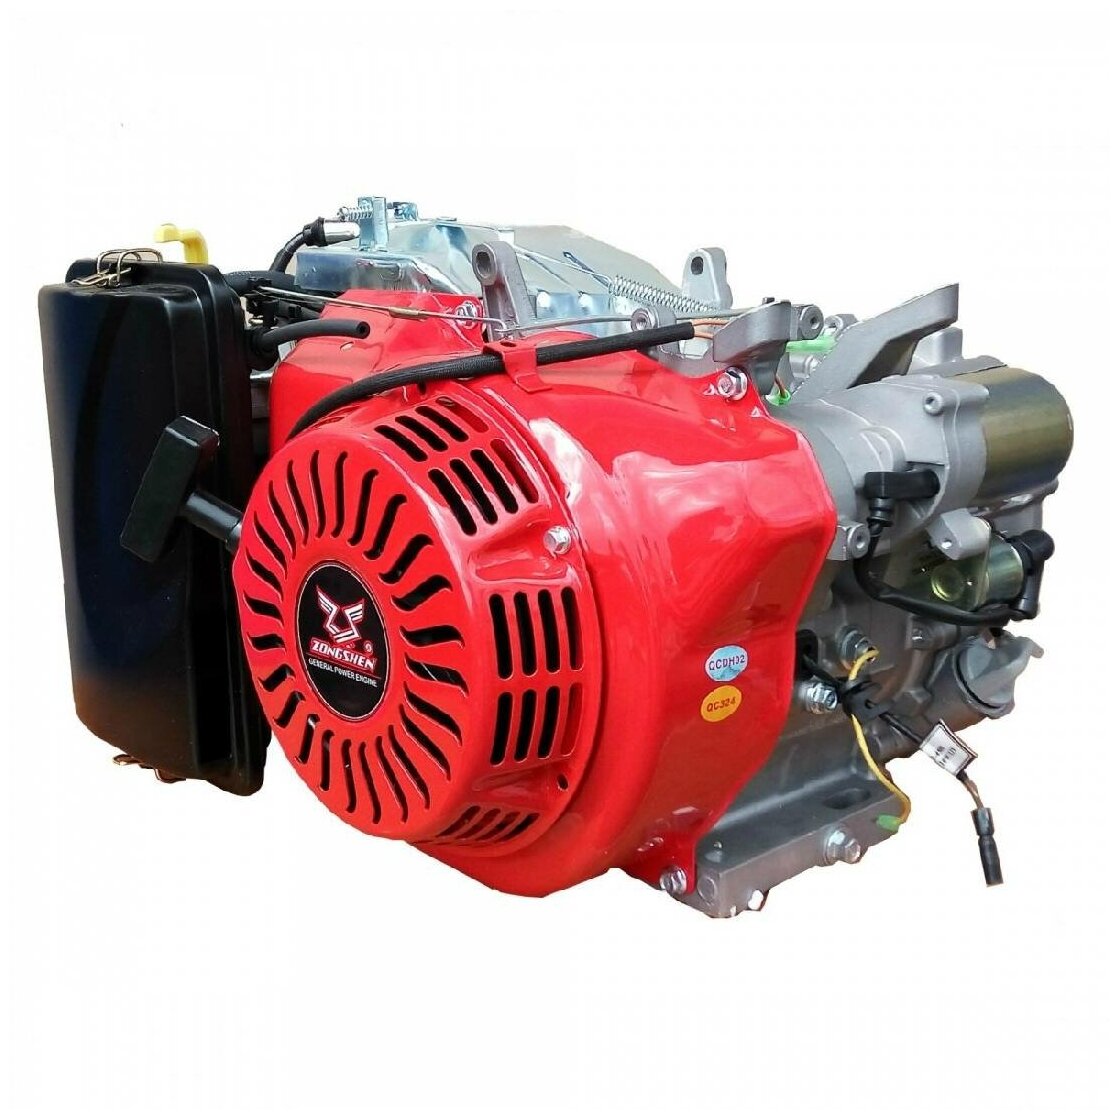 Мотор Zongshen 420, конический вал, 0.44 м, КНР - фотография № 2